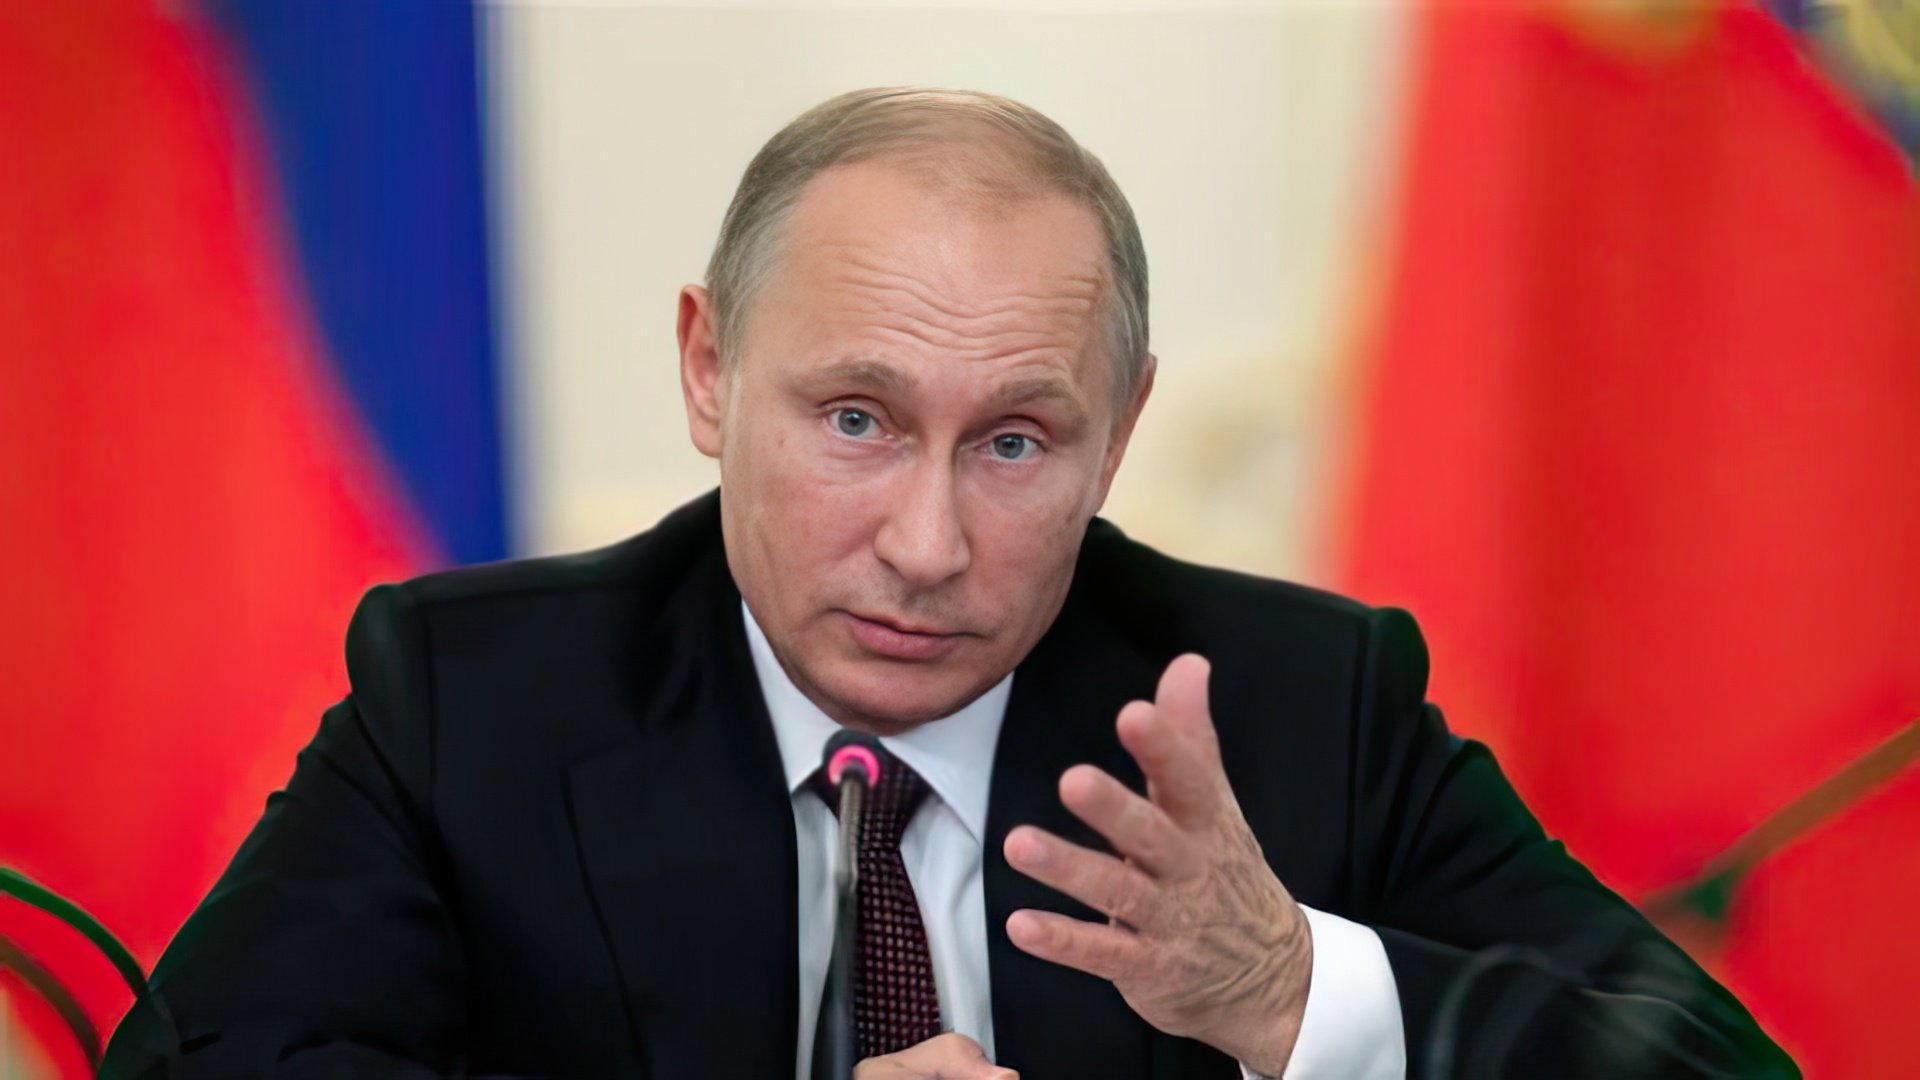 Vladimir Vladimirovich Putin is a President of the Russian Federation